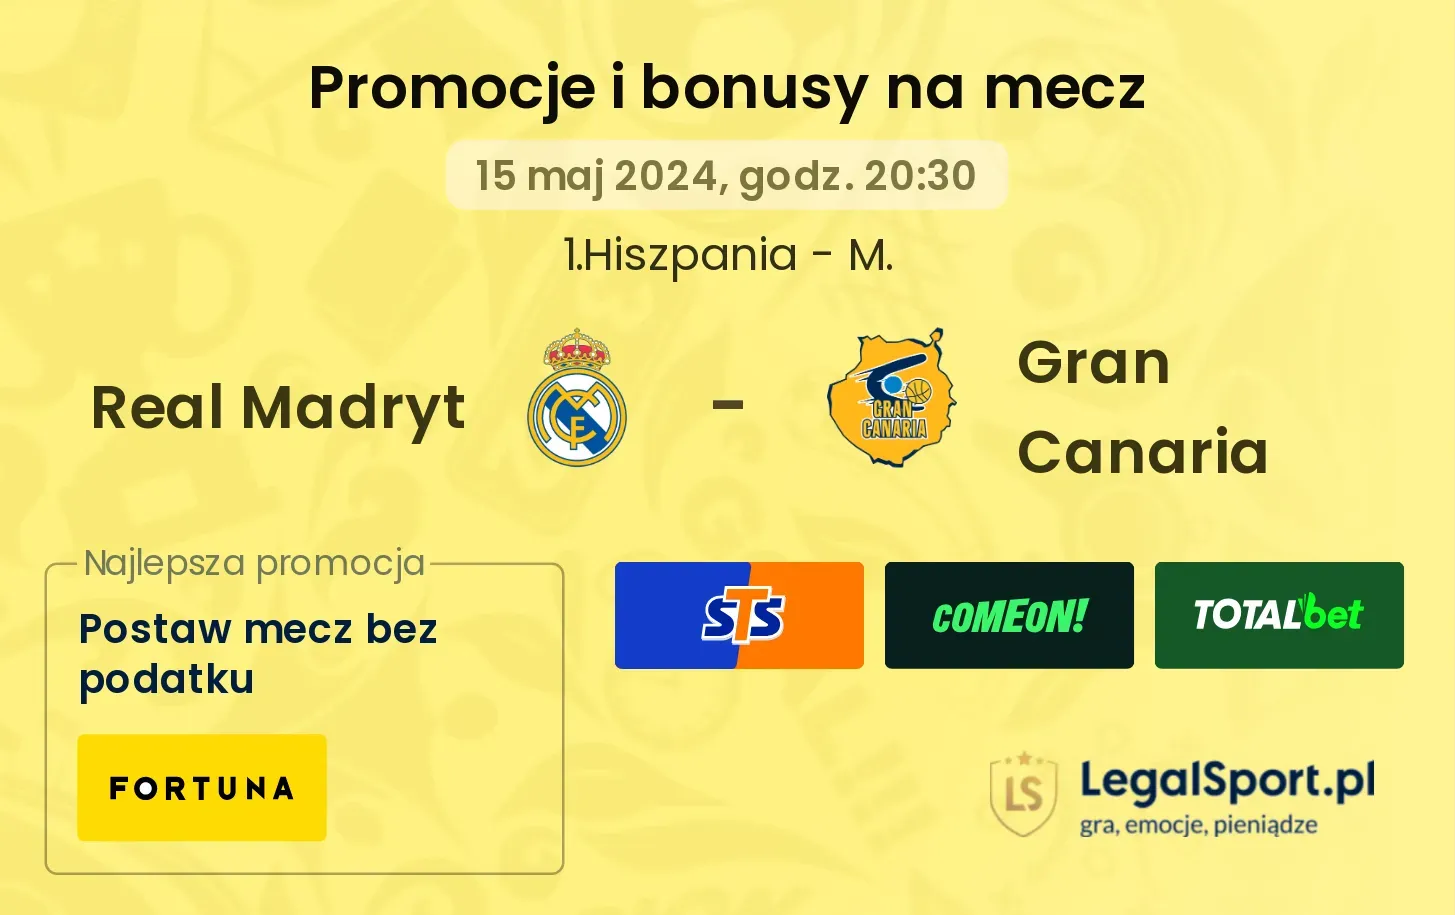 Real Madryt - Gran Canaria promocje bonusy na mecz